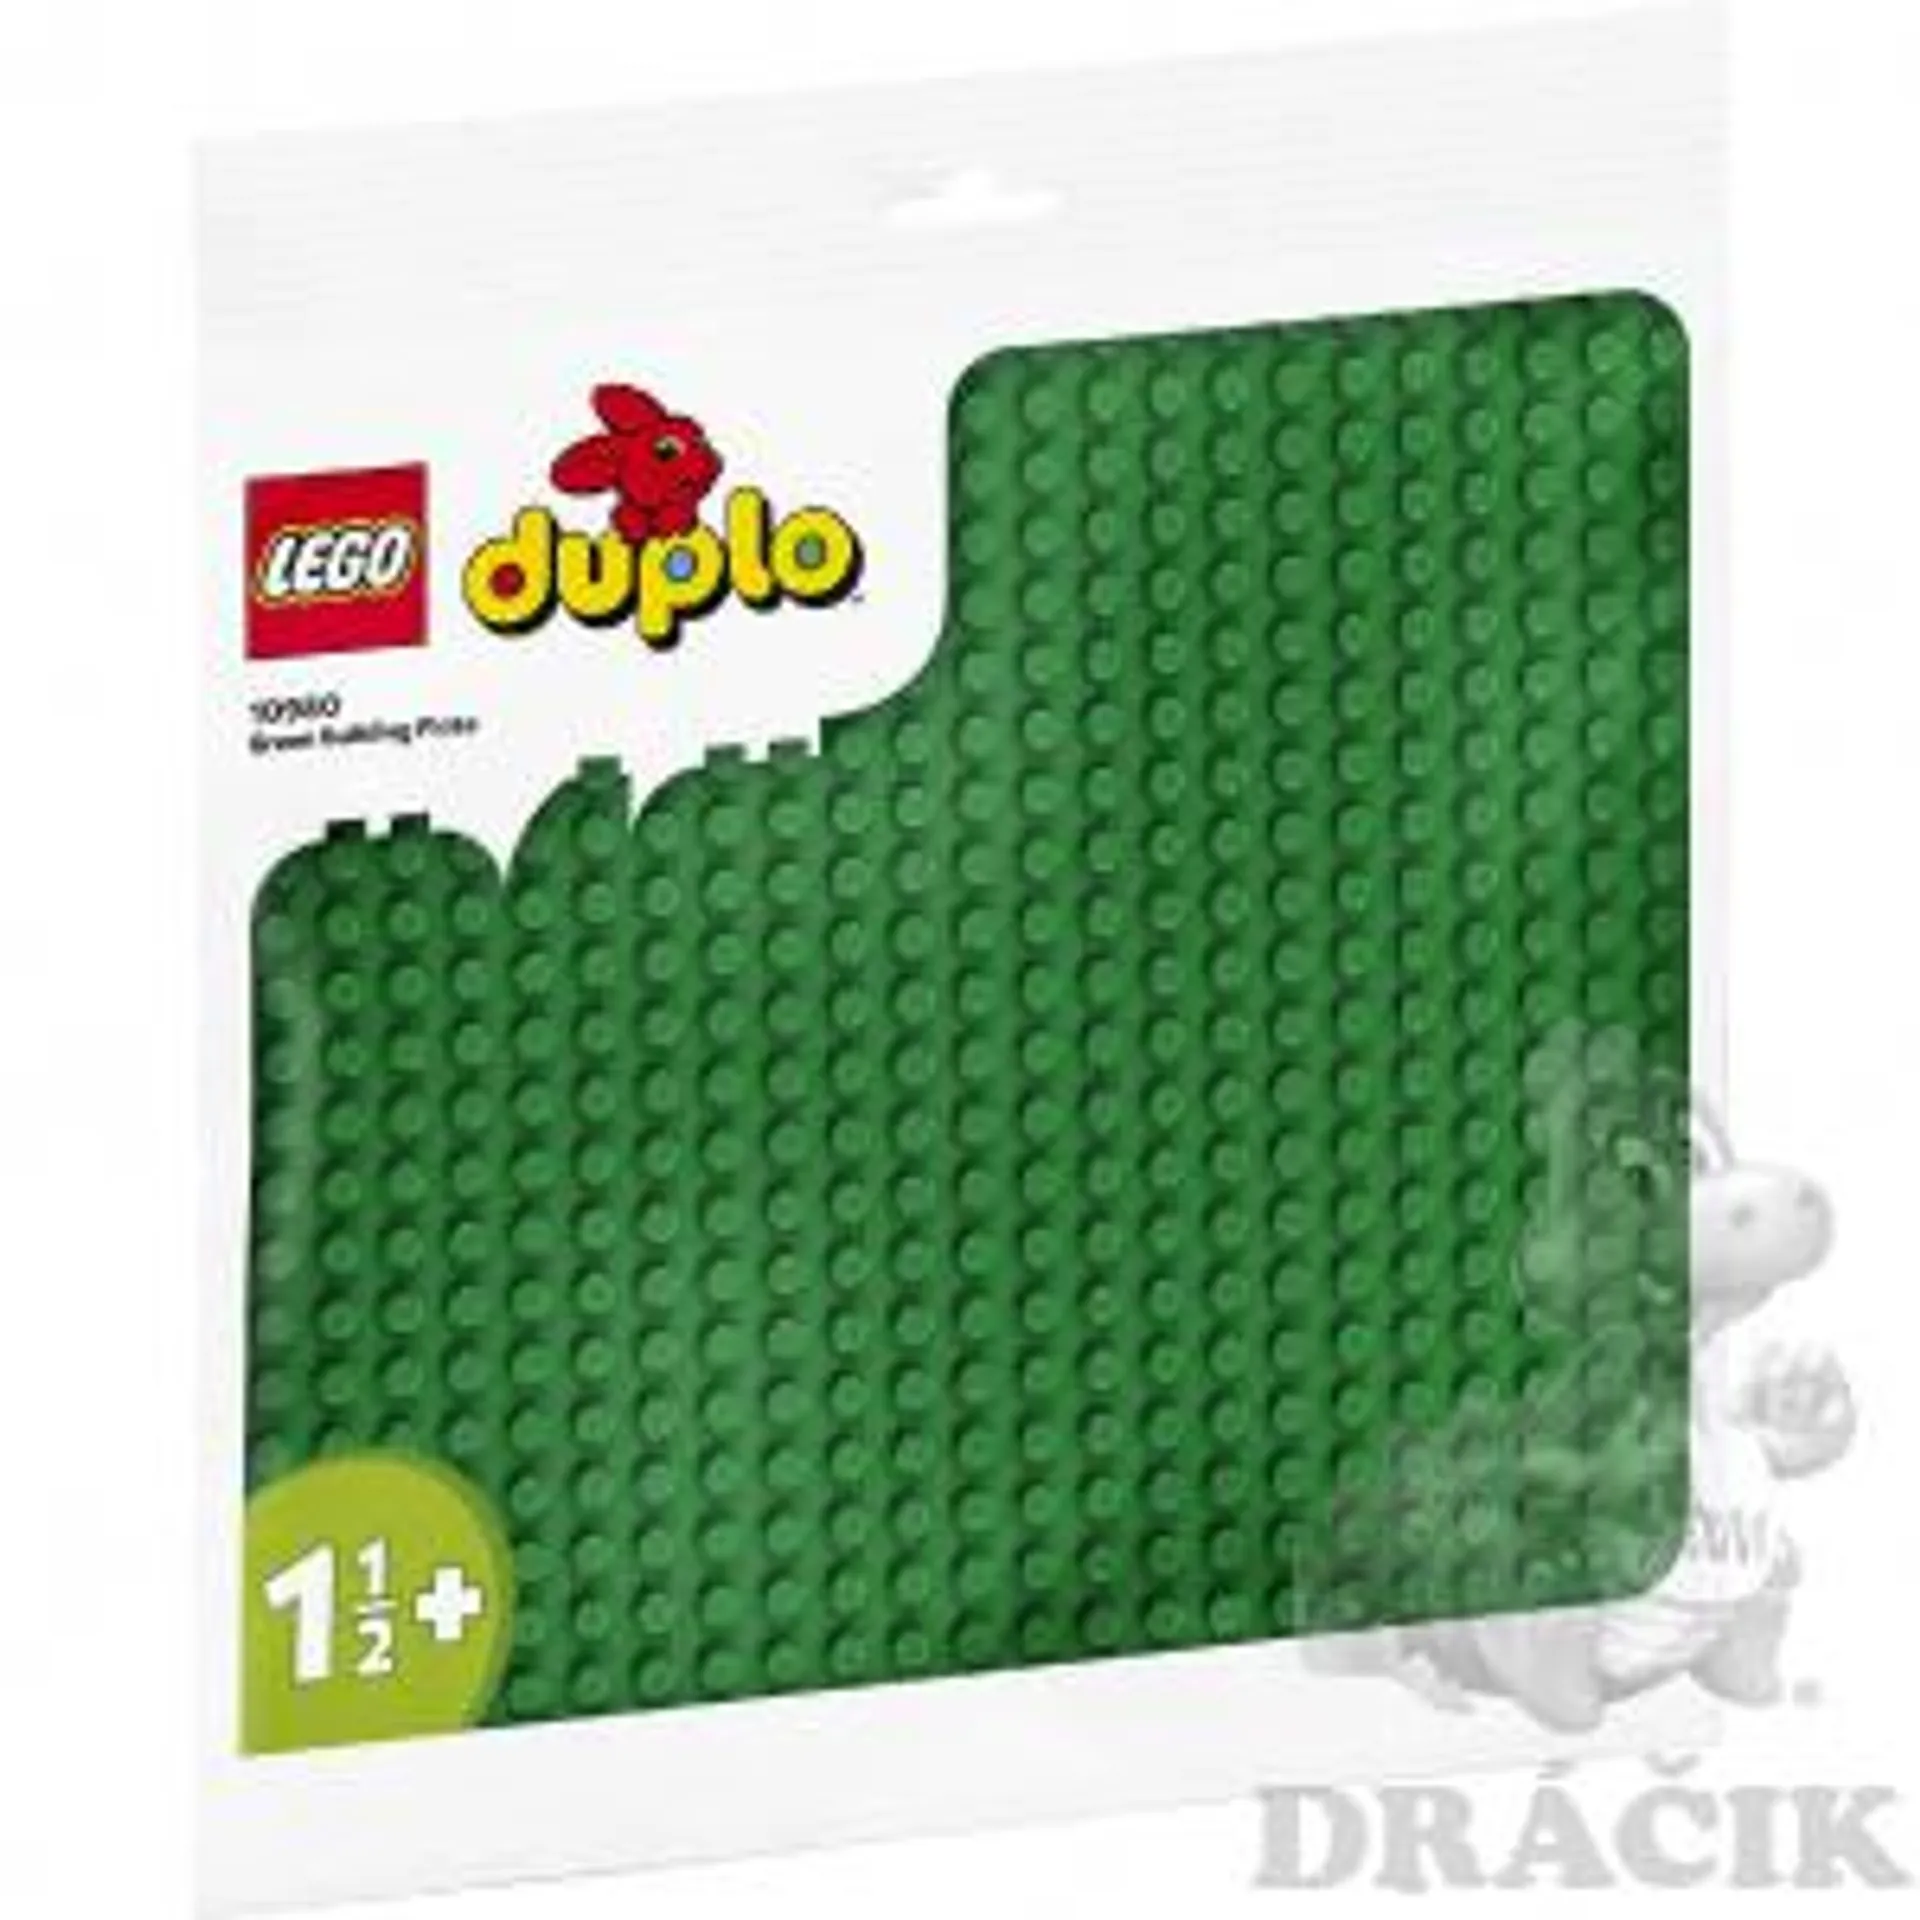 10980 LEGO DUPLO – Zelená podložka na stavanie